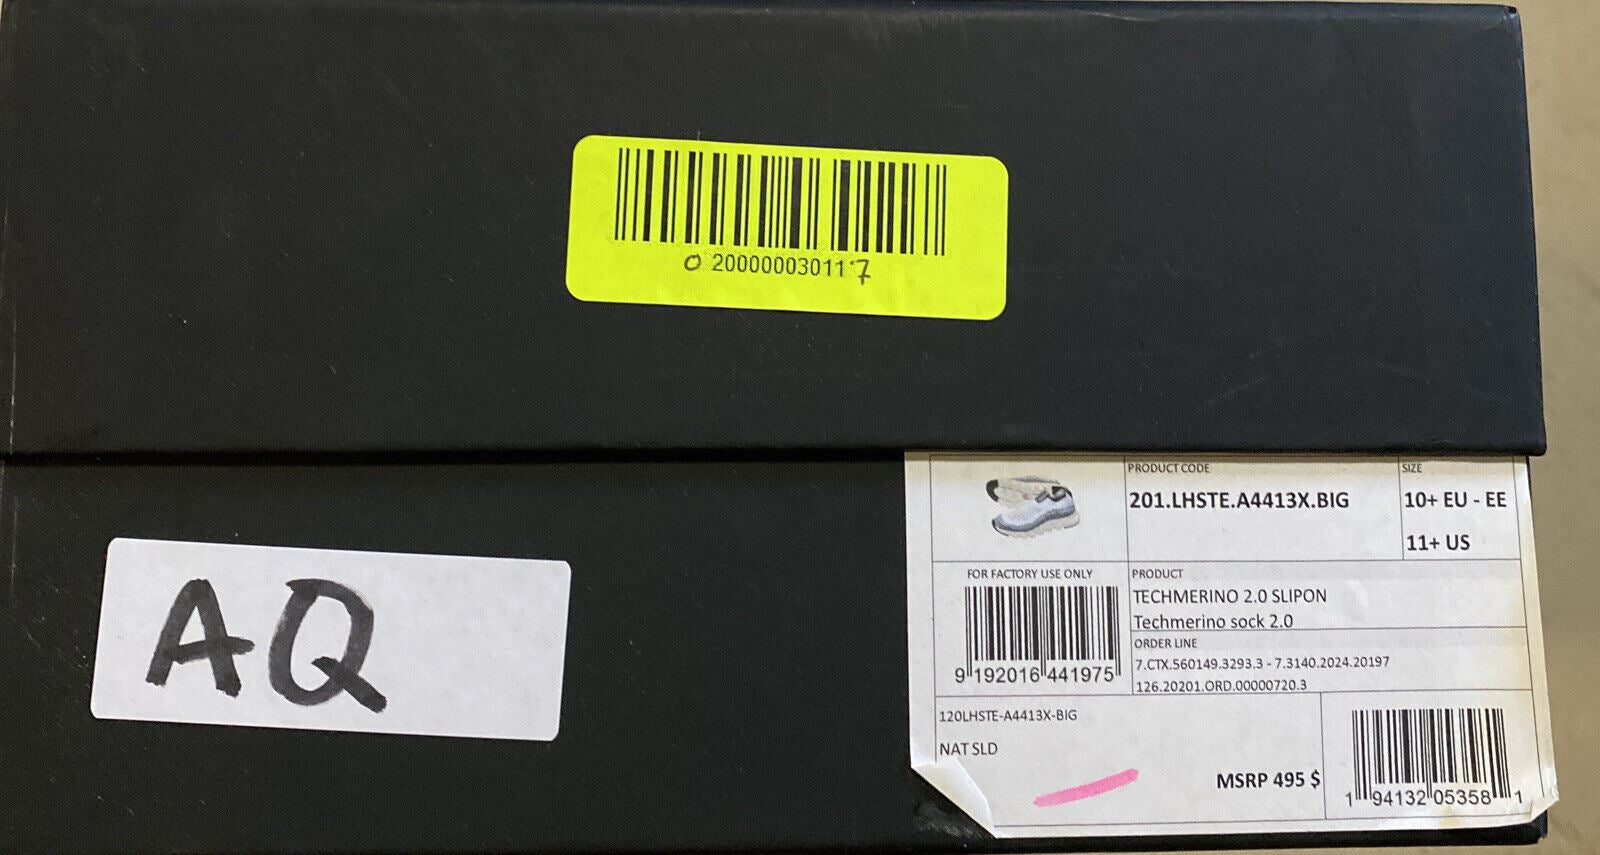 New $495 Z Zegna Men Sock Runners  Sneakers Shoes White/Gray 11.5 US/44.5 Eu